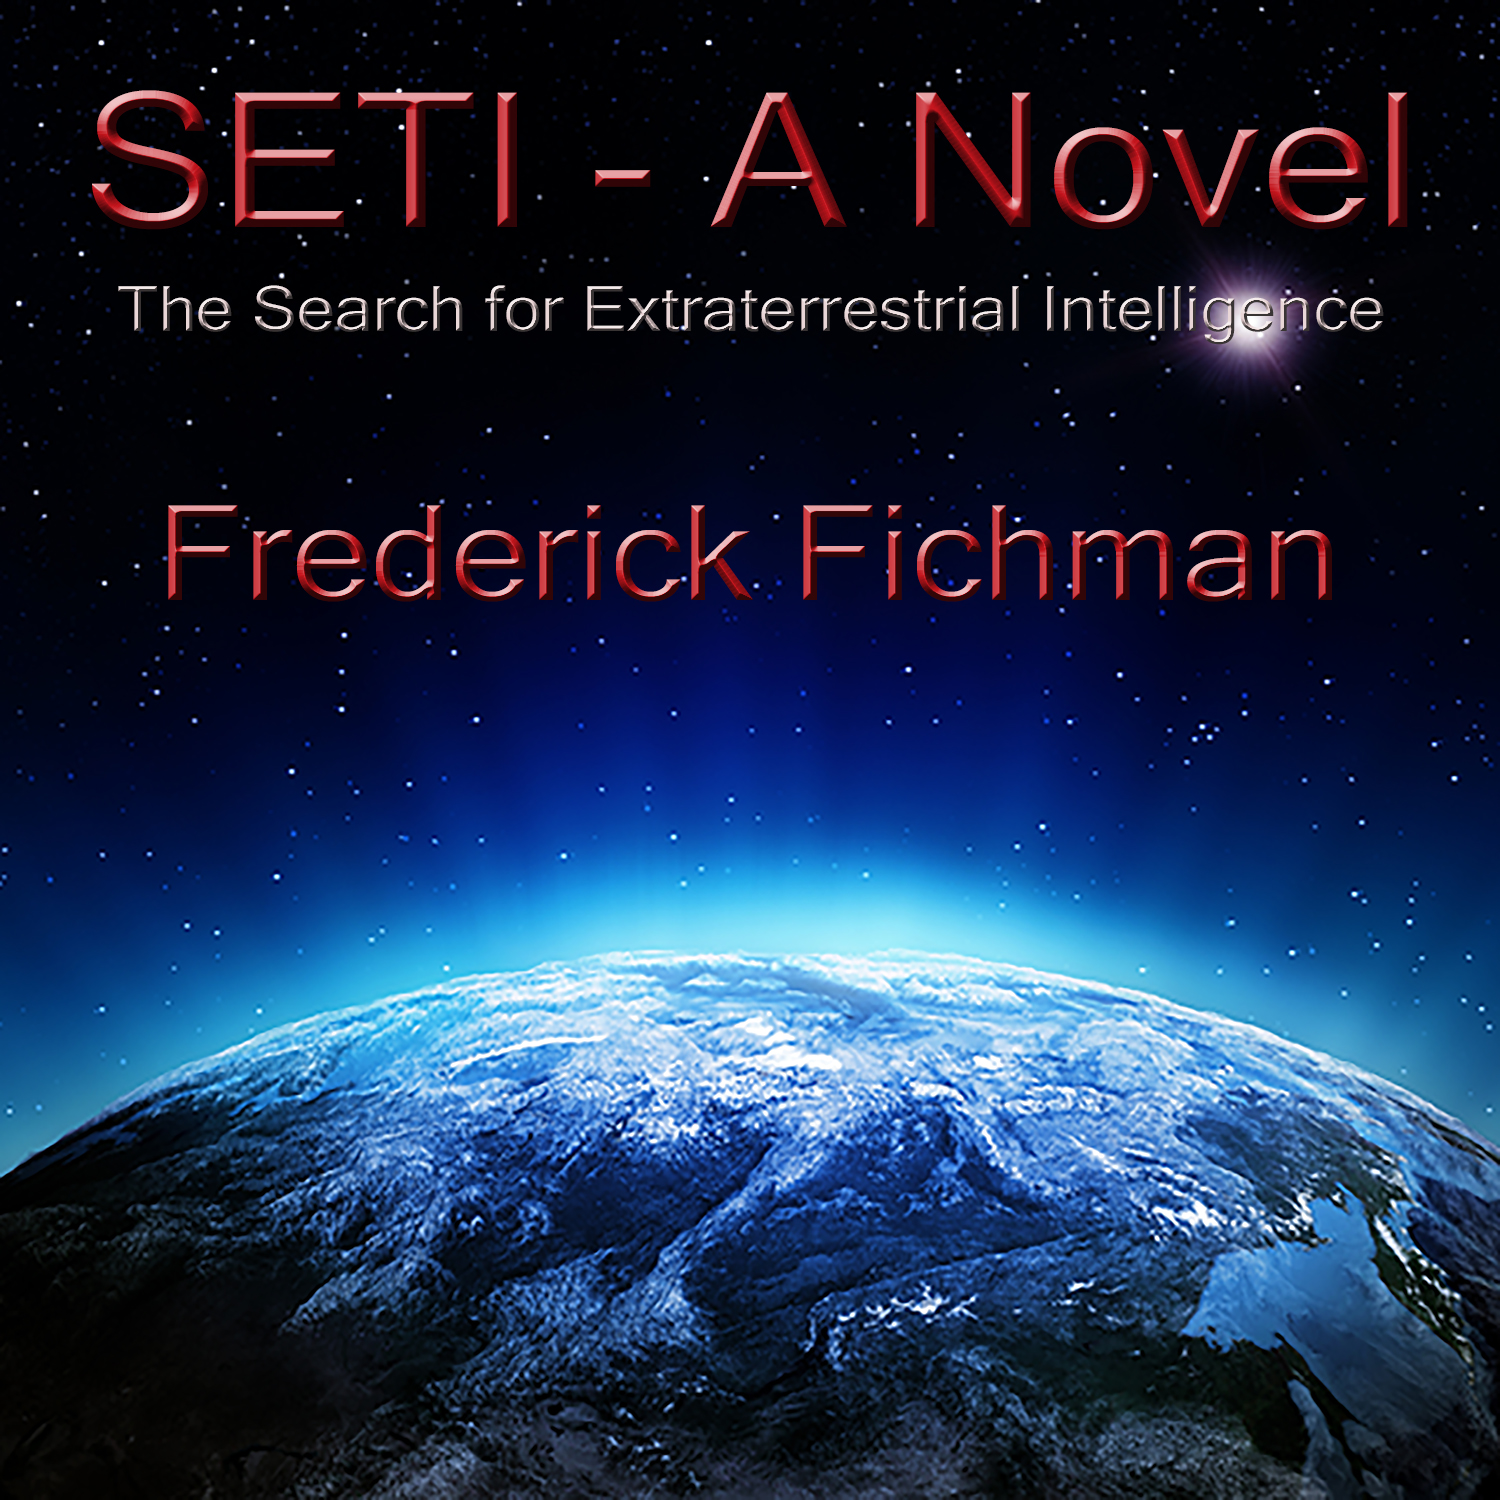 SETI - A Novel's artwork